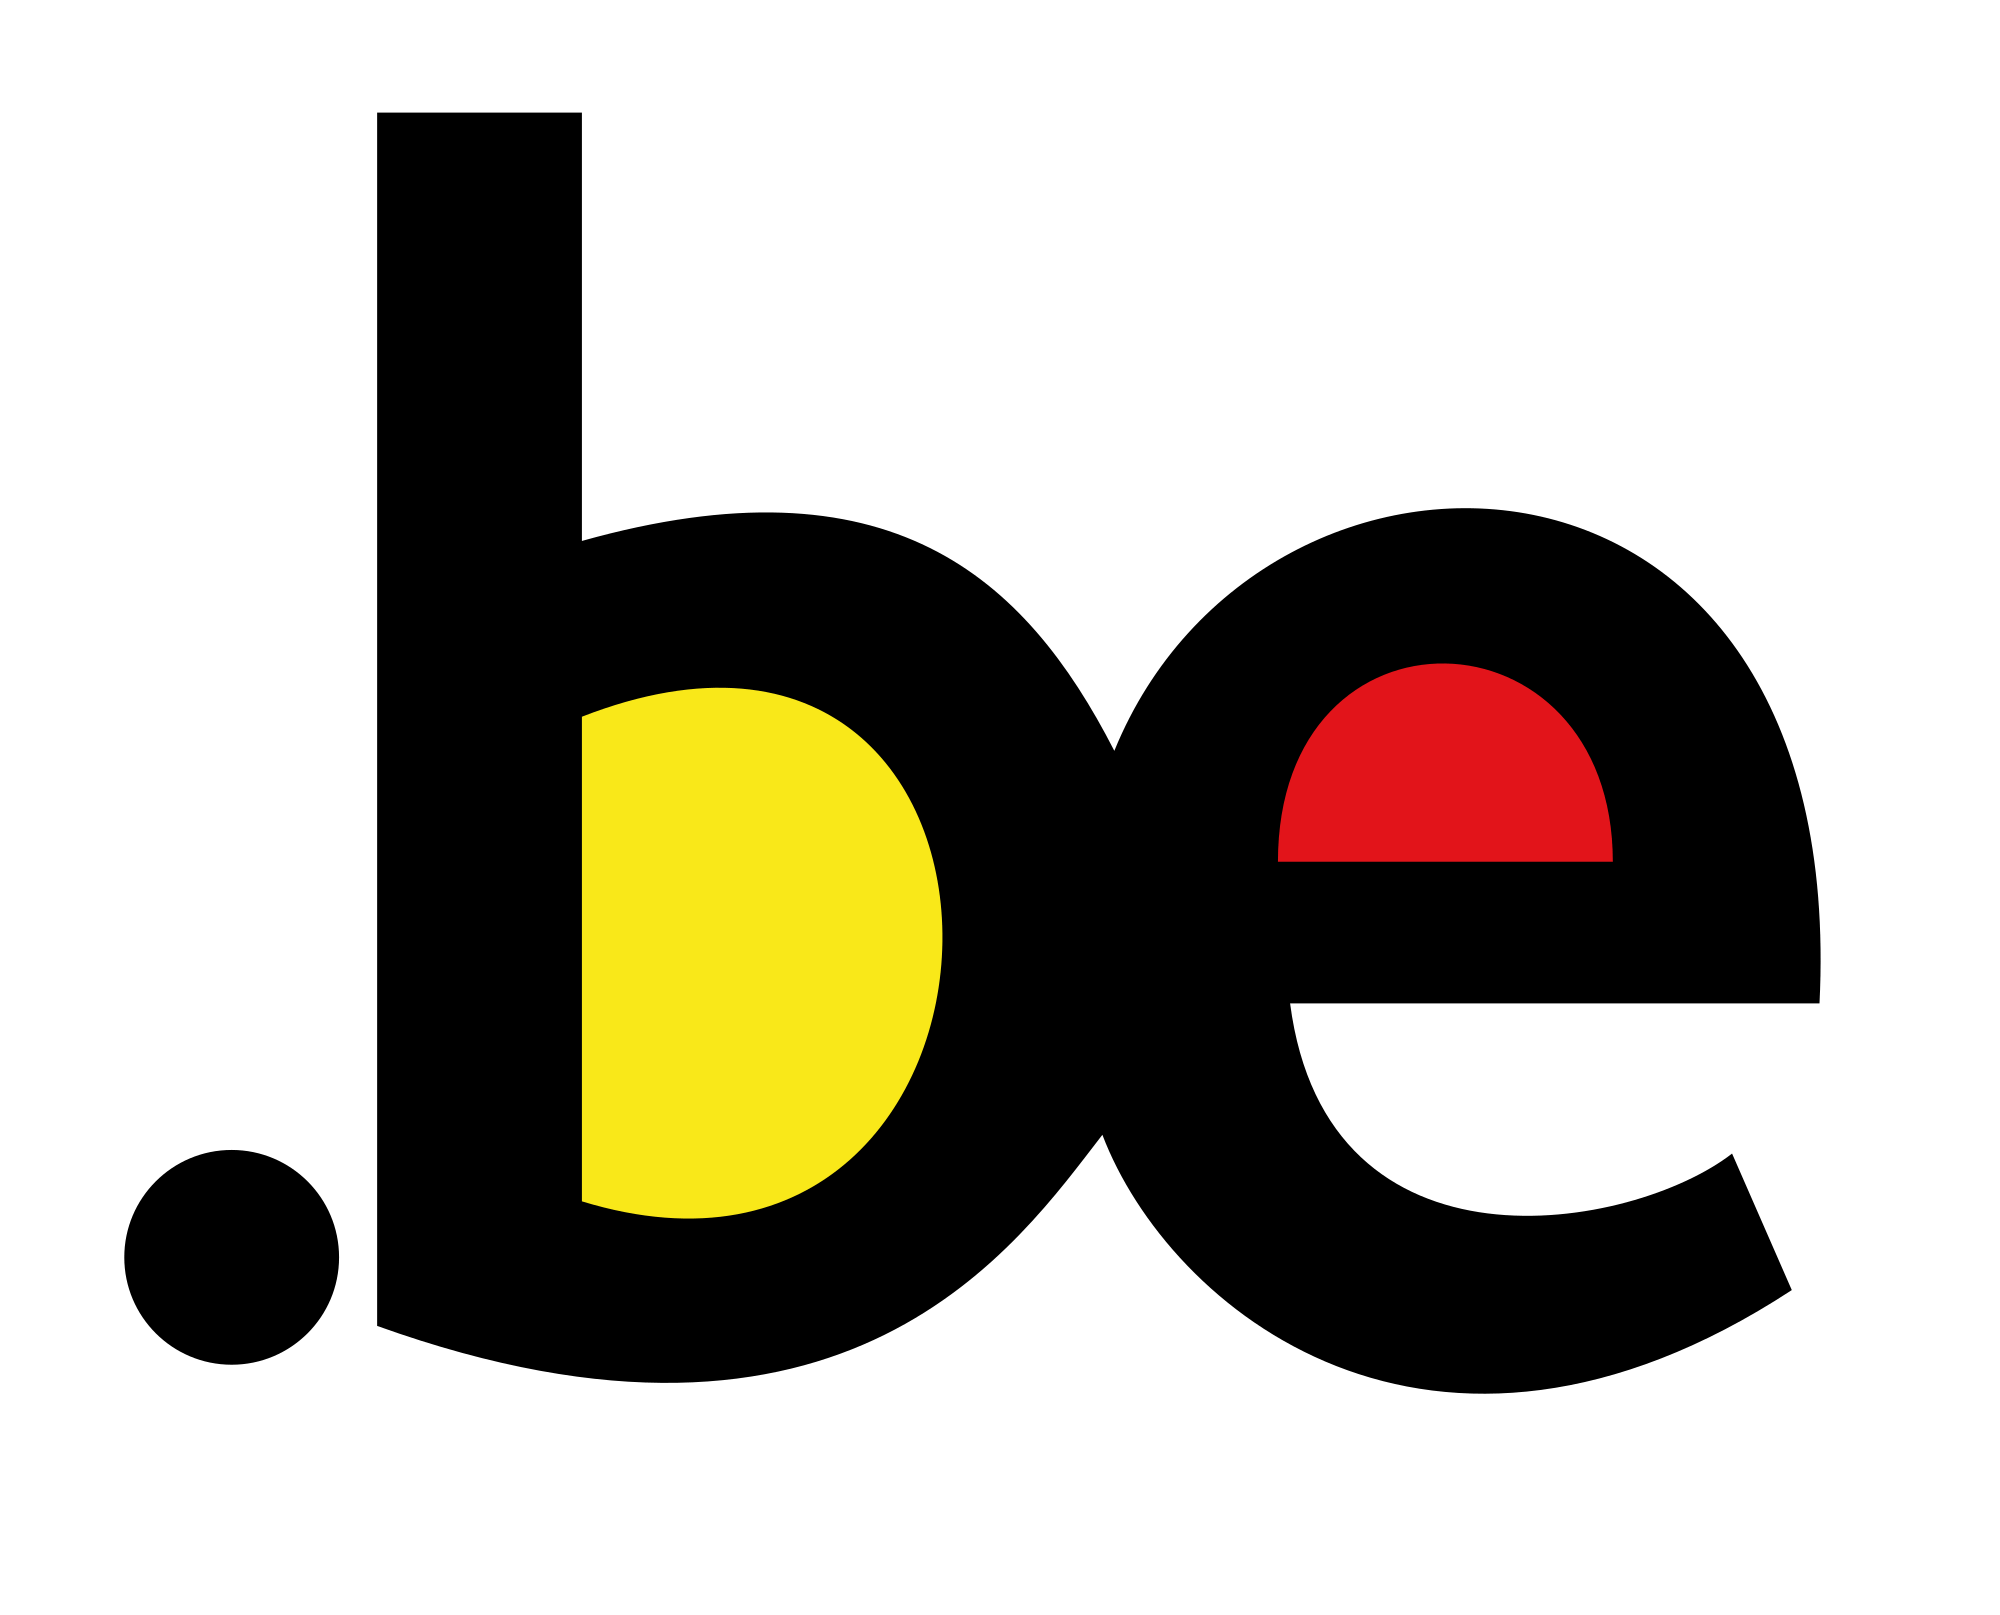 Be Logo - File:Be-logo.svg - Wikimedia Commons